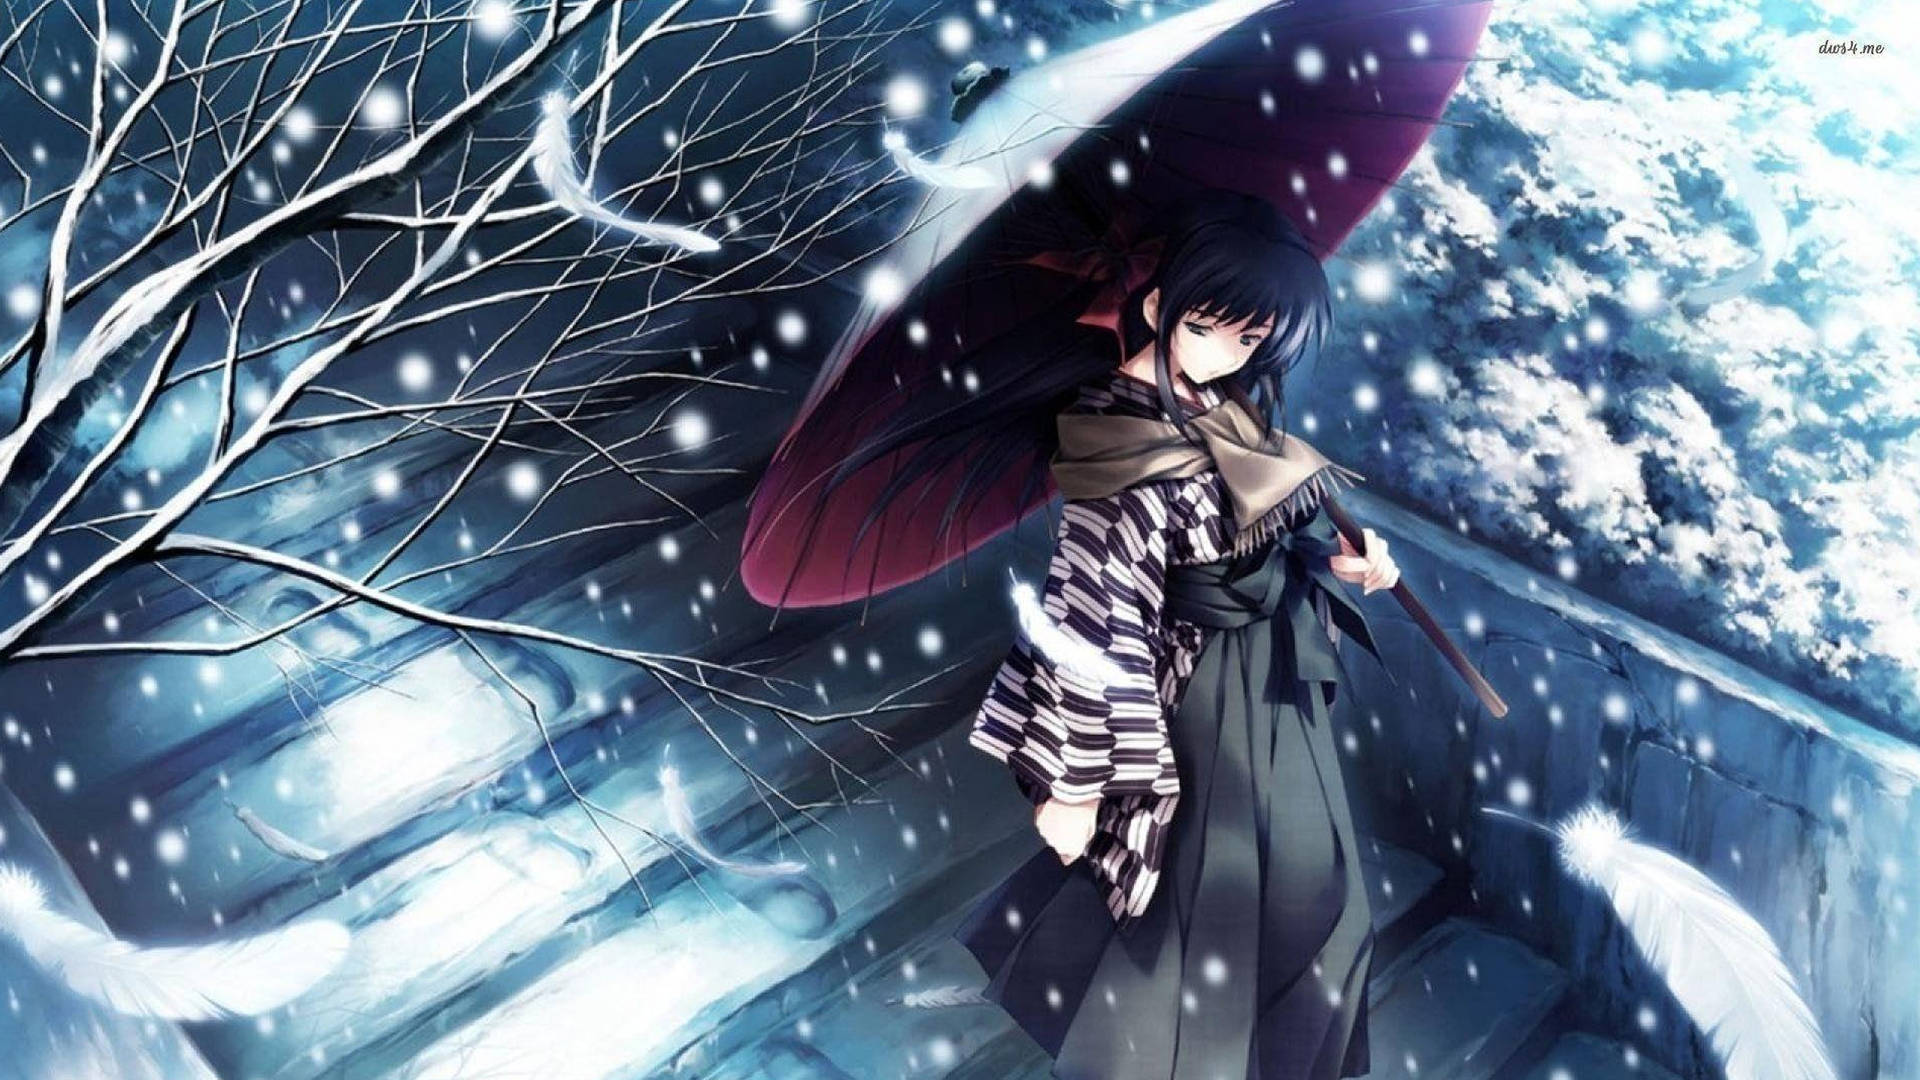 Sad Anime 4k Girl With Umbrella In Snow Background